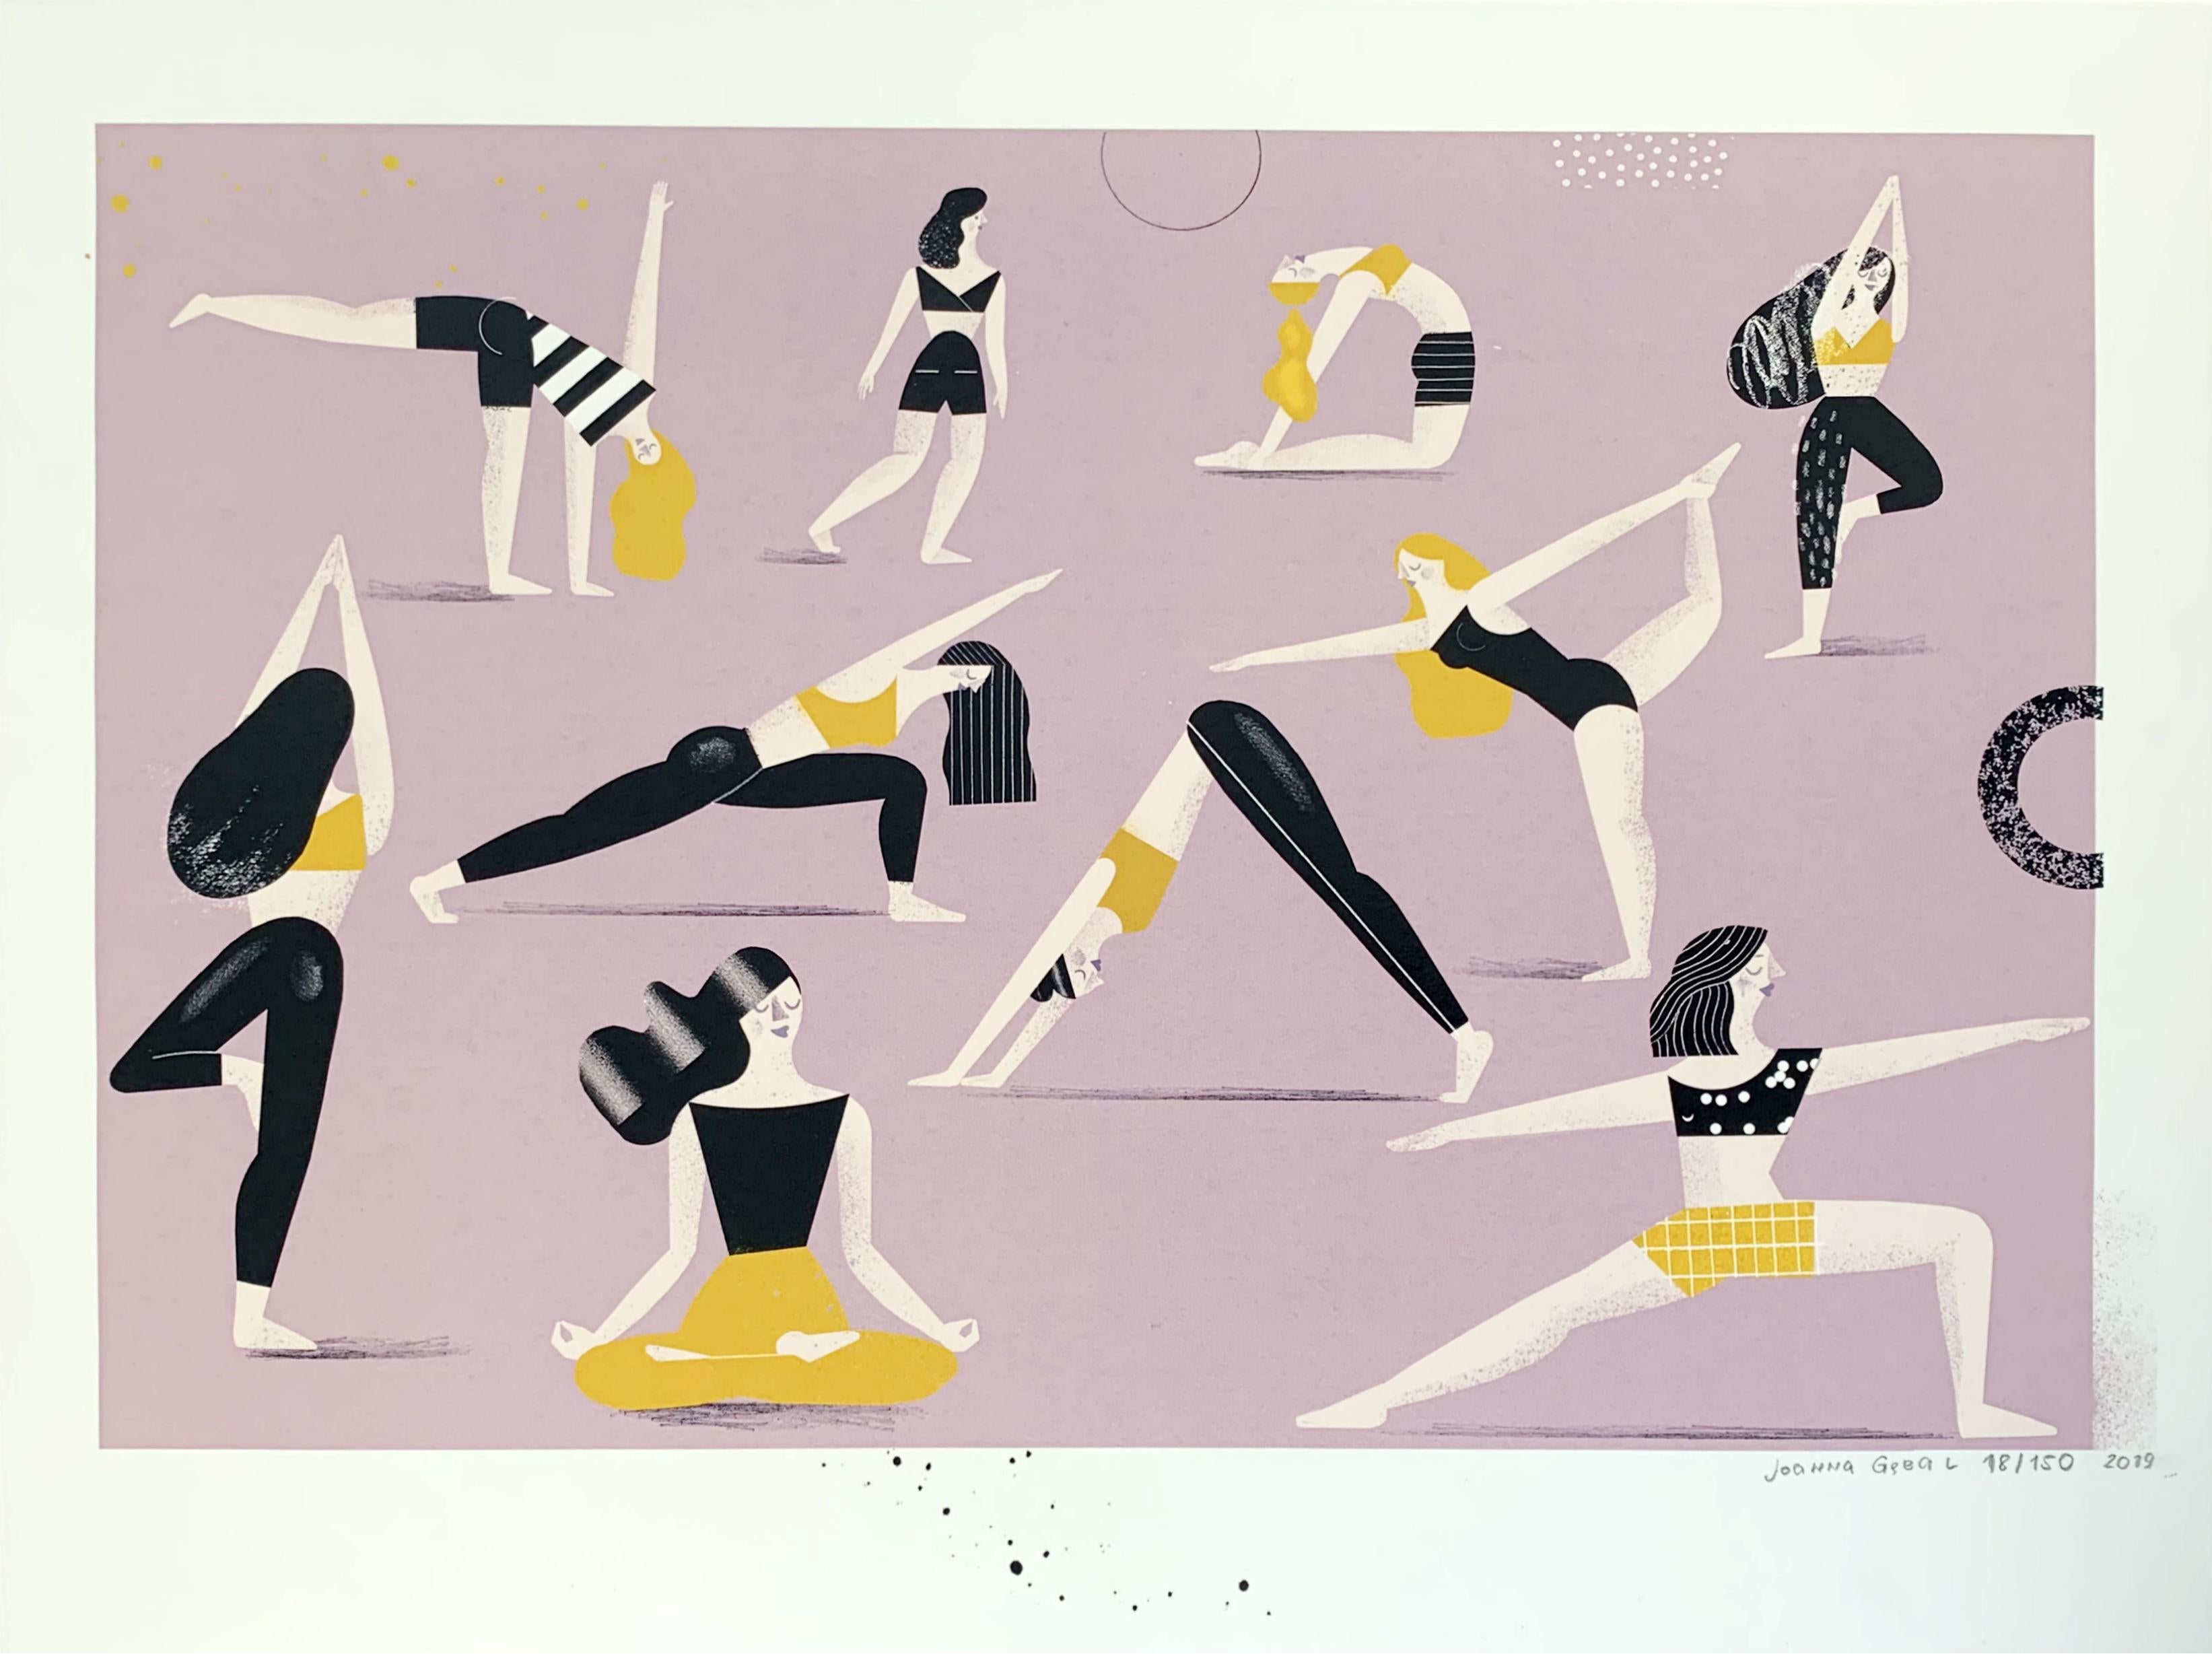 Yoga - Digital print, Young art, Contemporary figurative art, Colorful - Print by Joanna Gebal